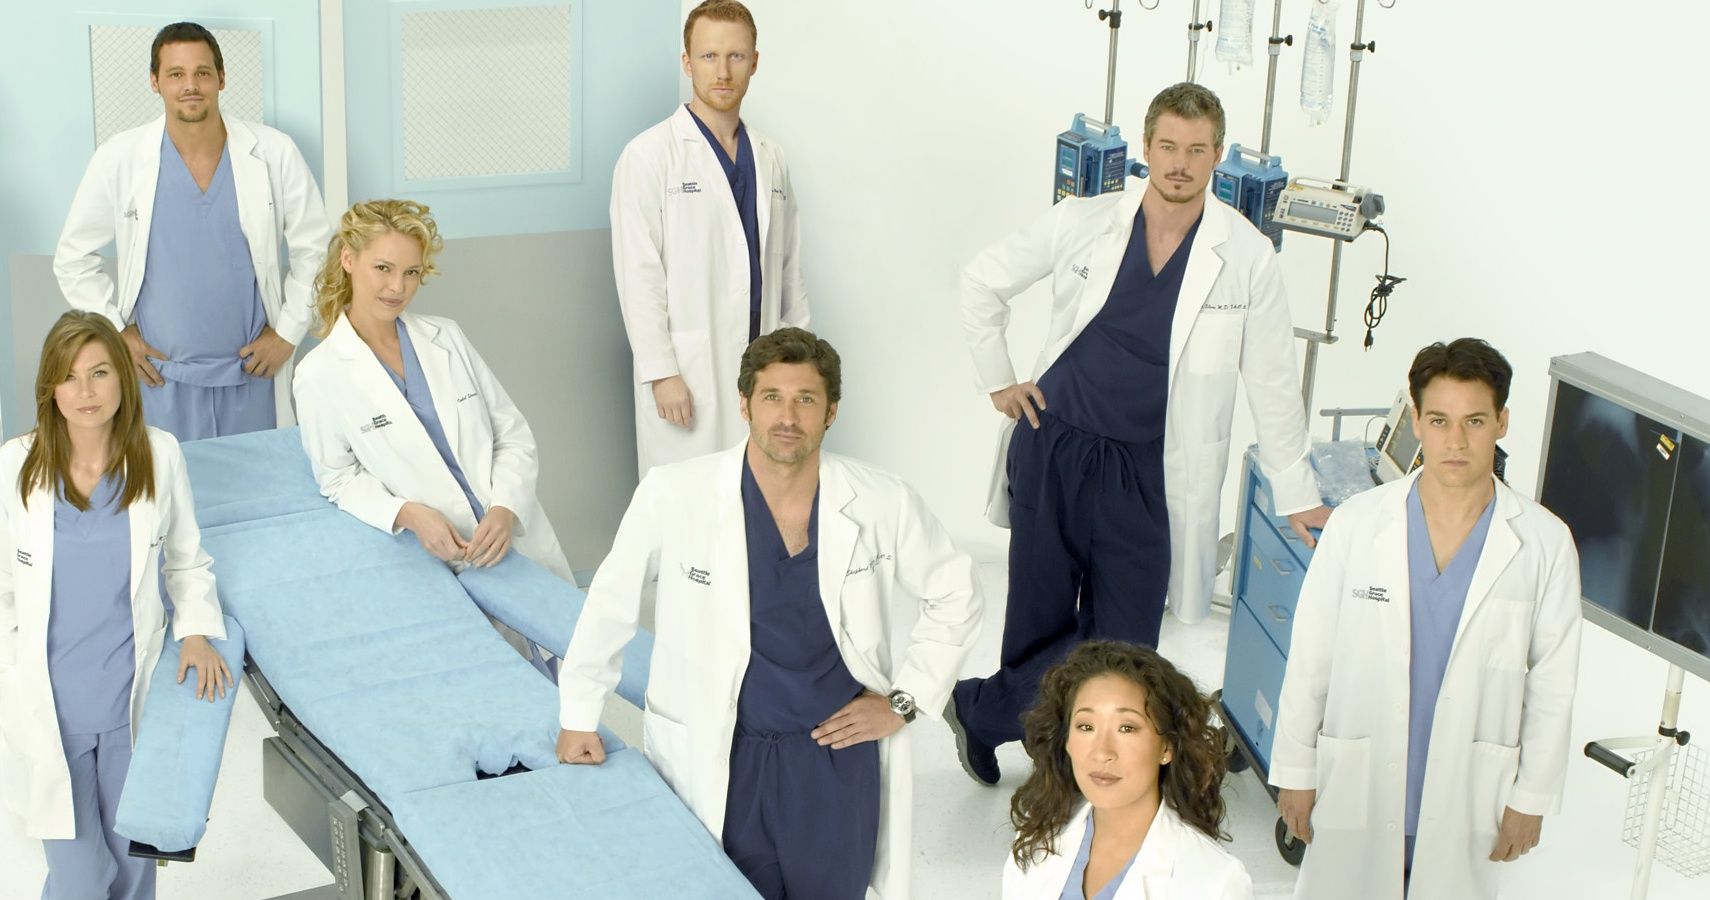 Greys Anatomy Best Episodes Of Season 5 Ranked (According To IMDb)